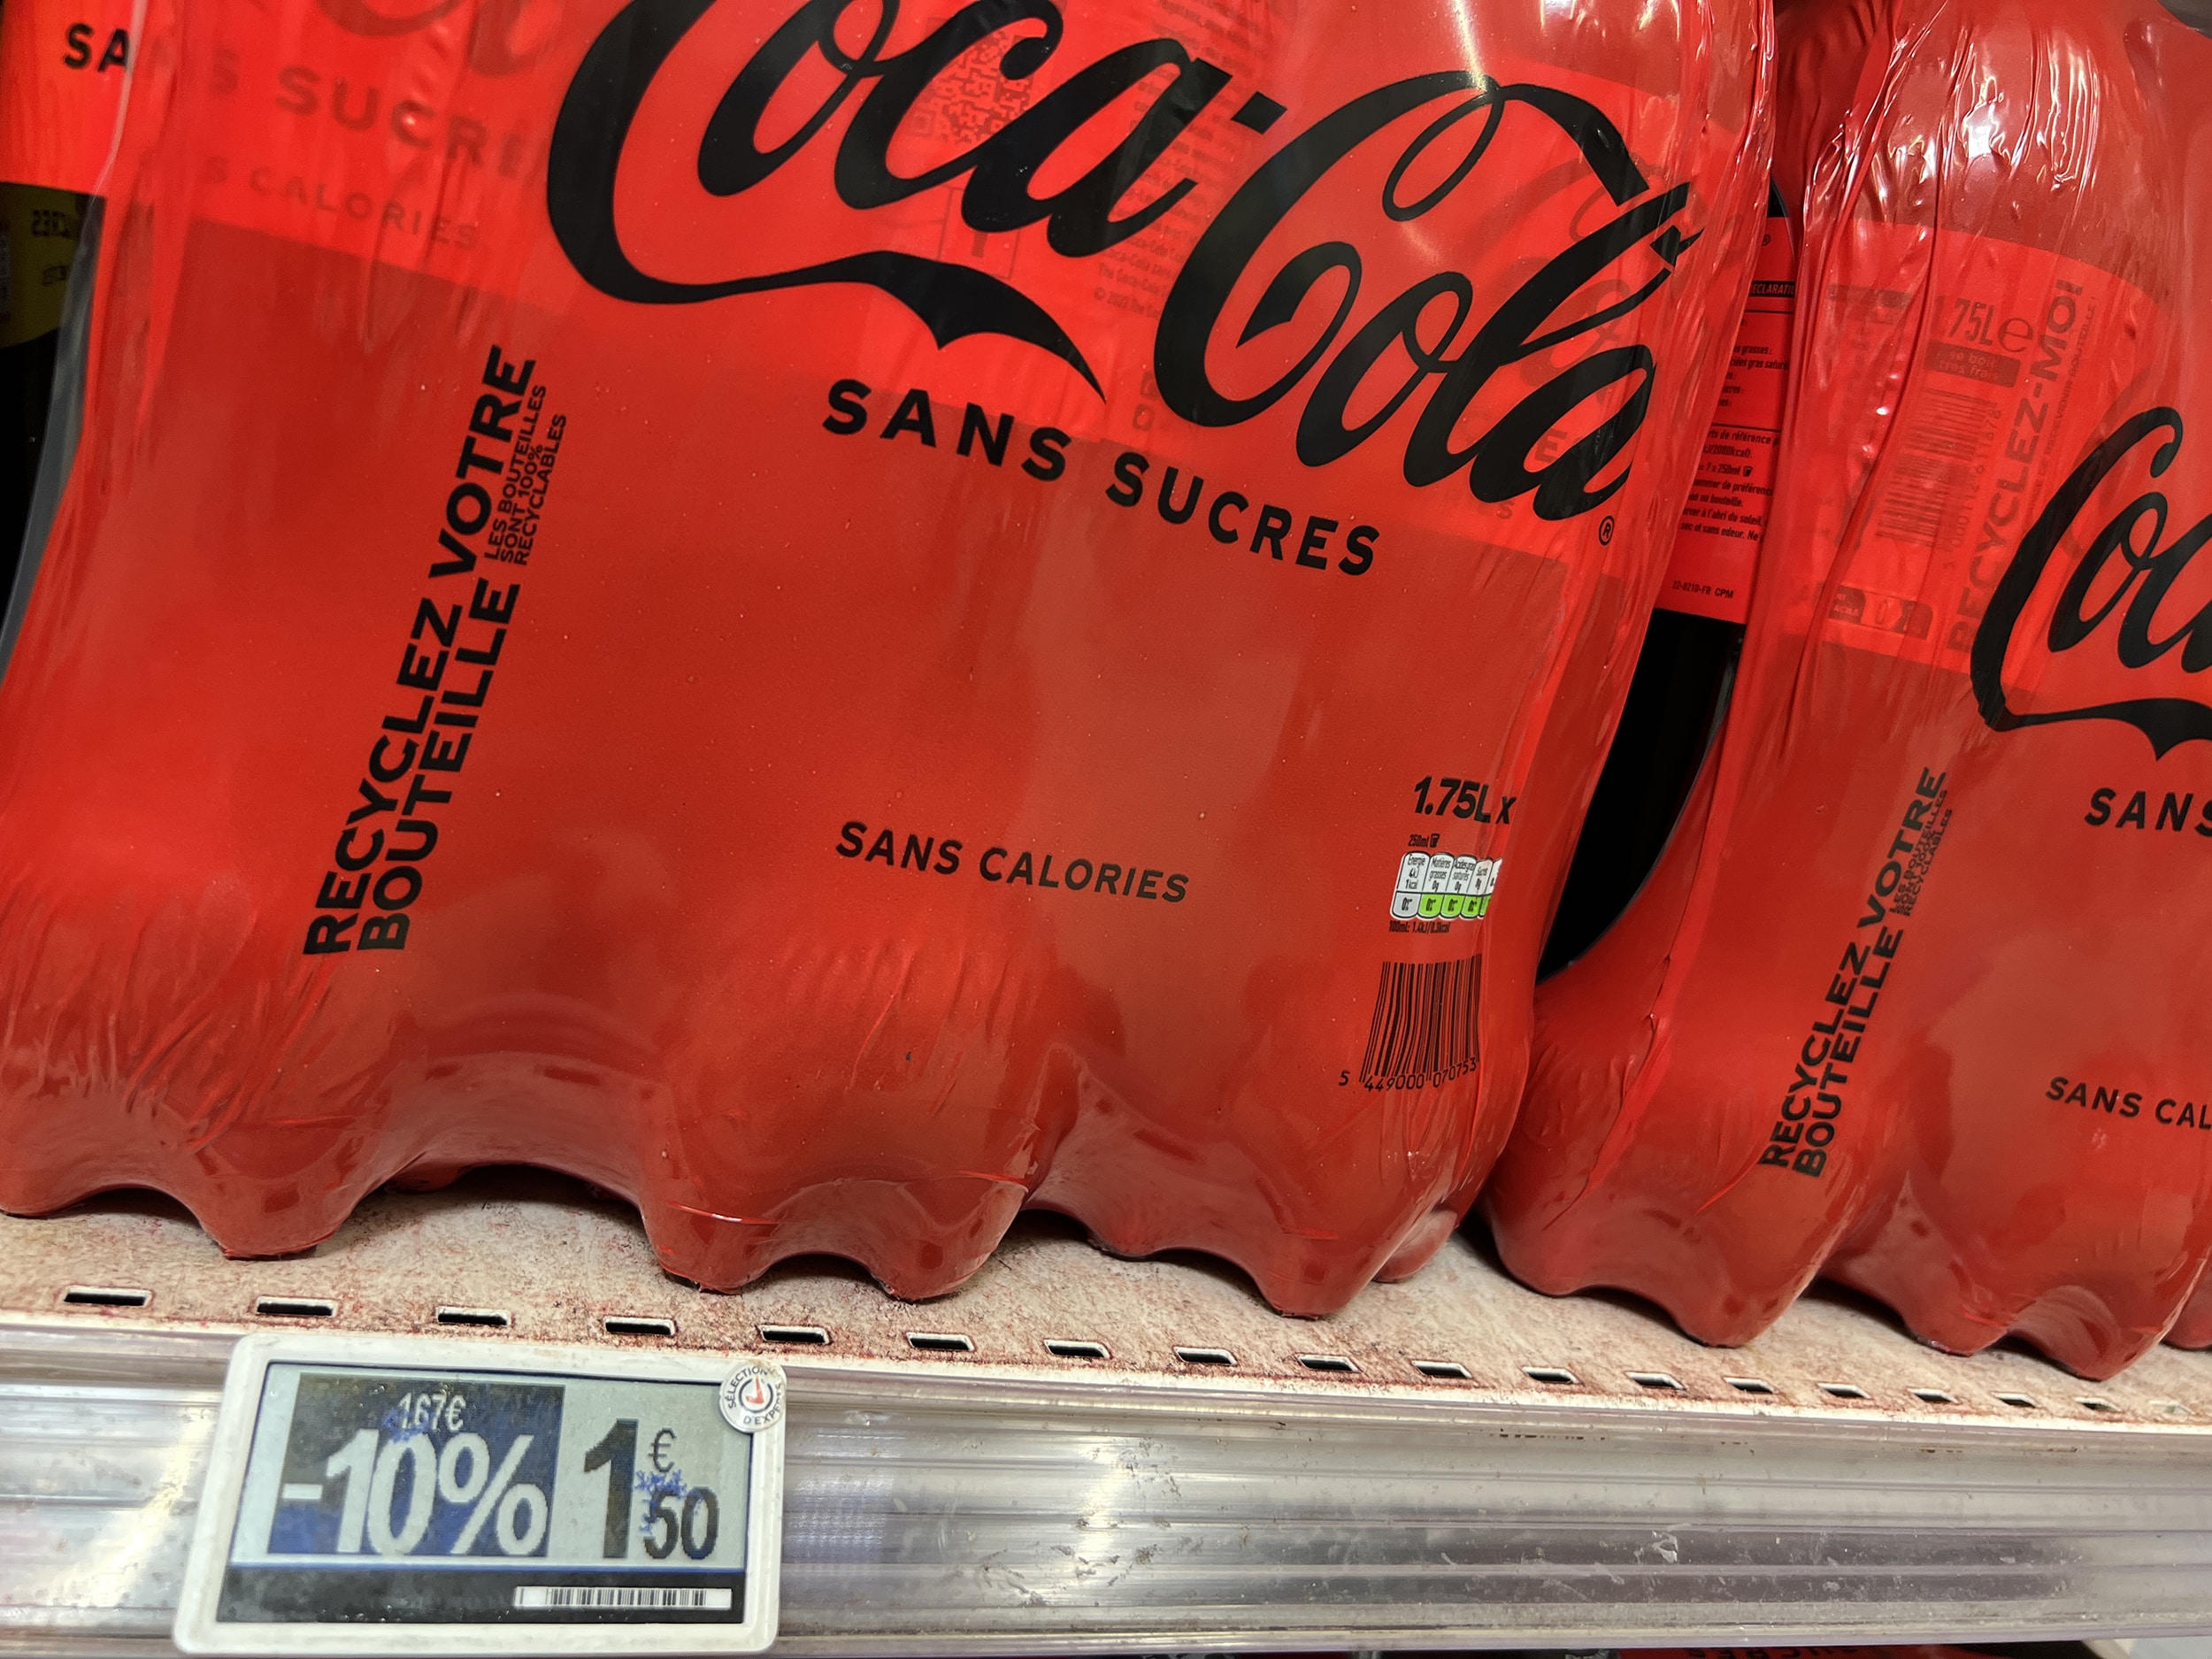 Grande bouteille de coca-cola (1.75 L)